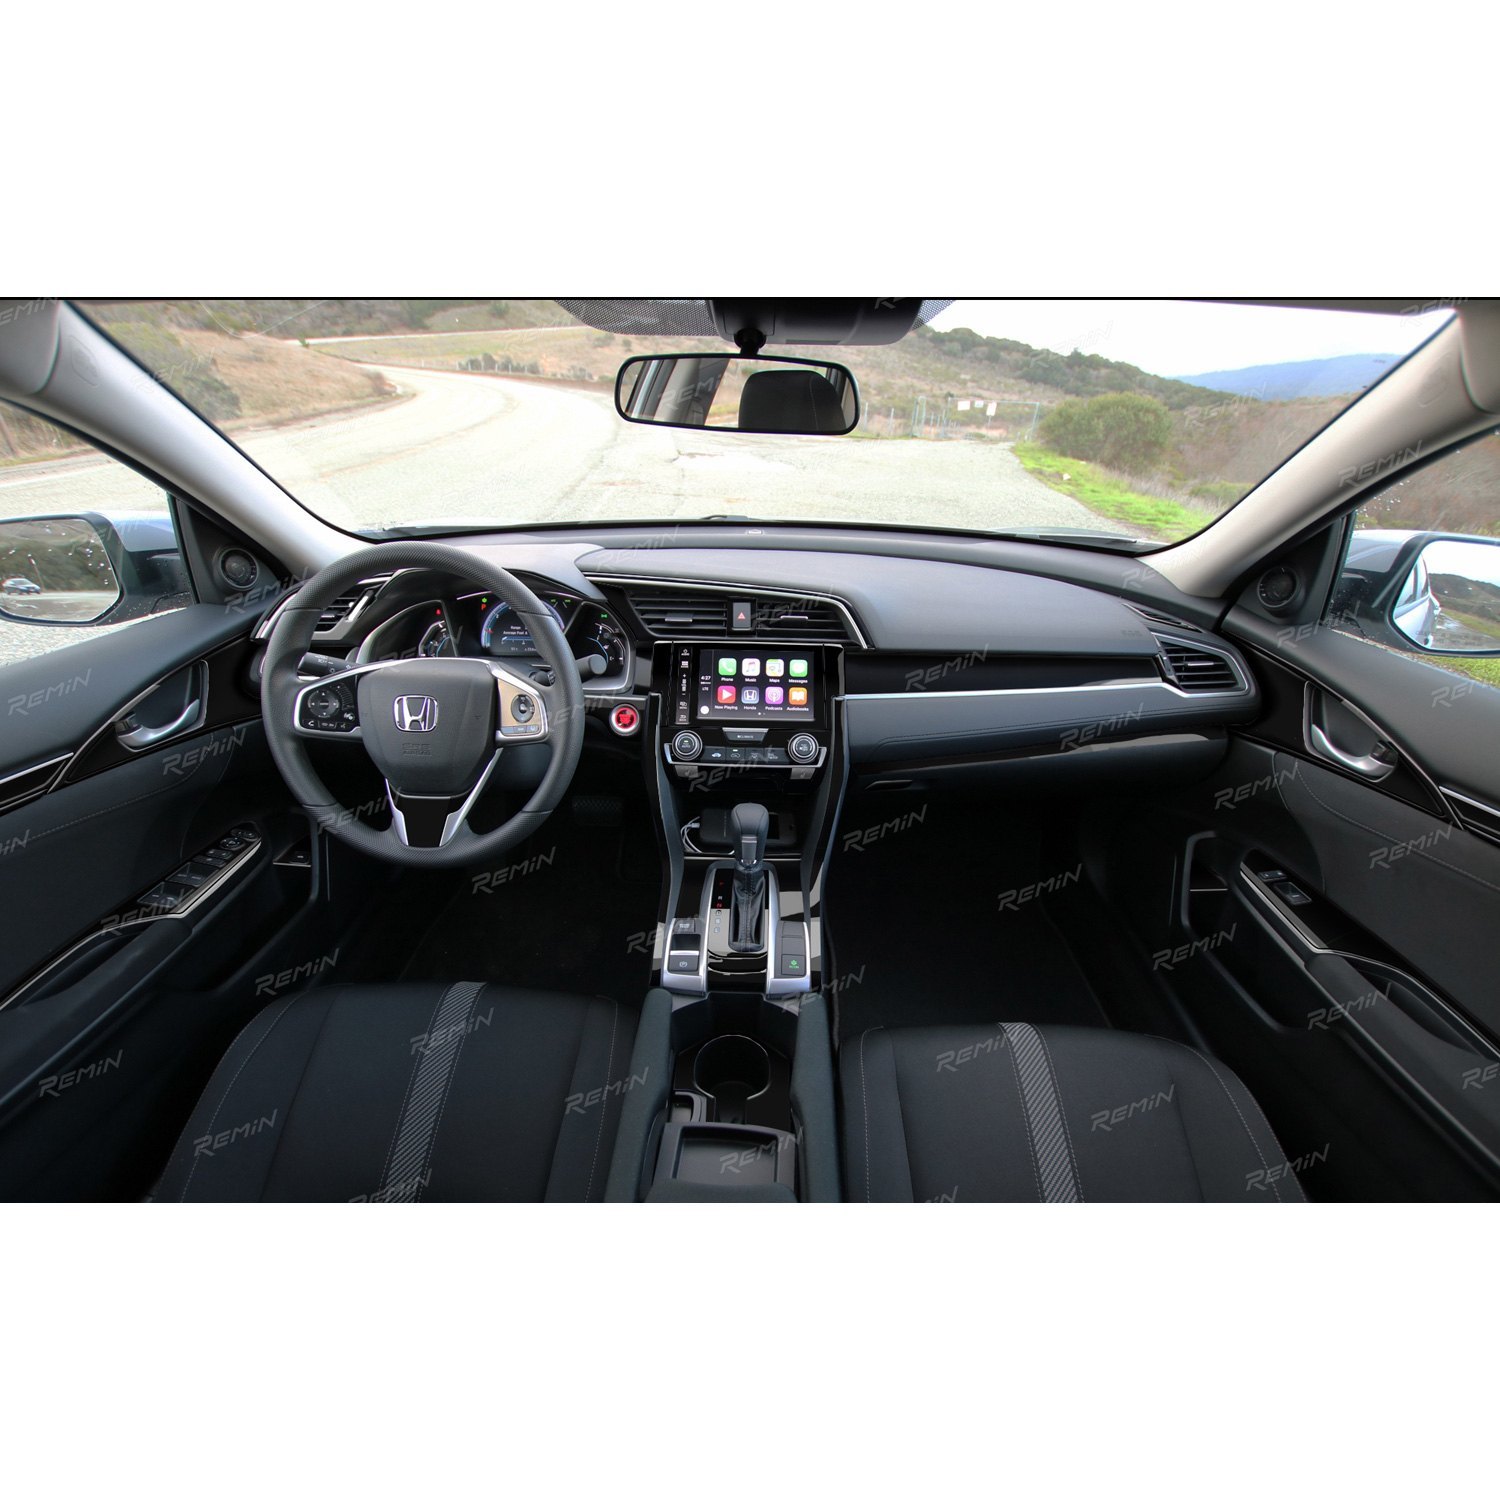 Remin Honda Civic With Digital Climate Control 2017 Dash Kit